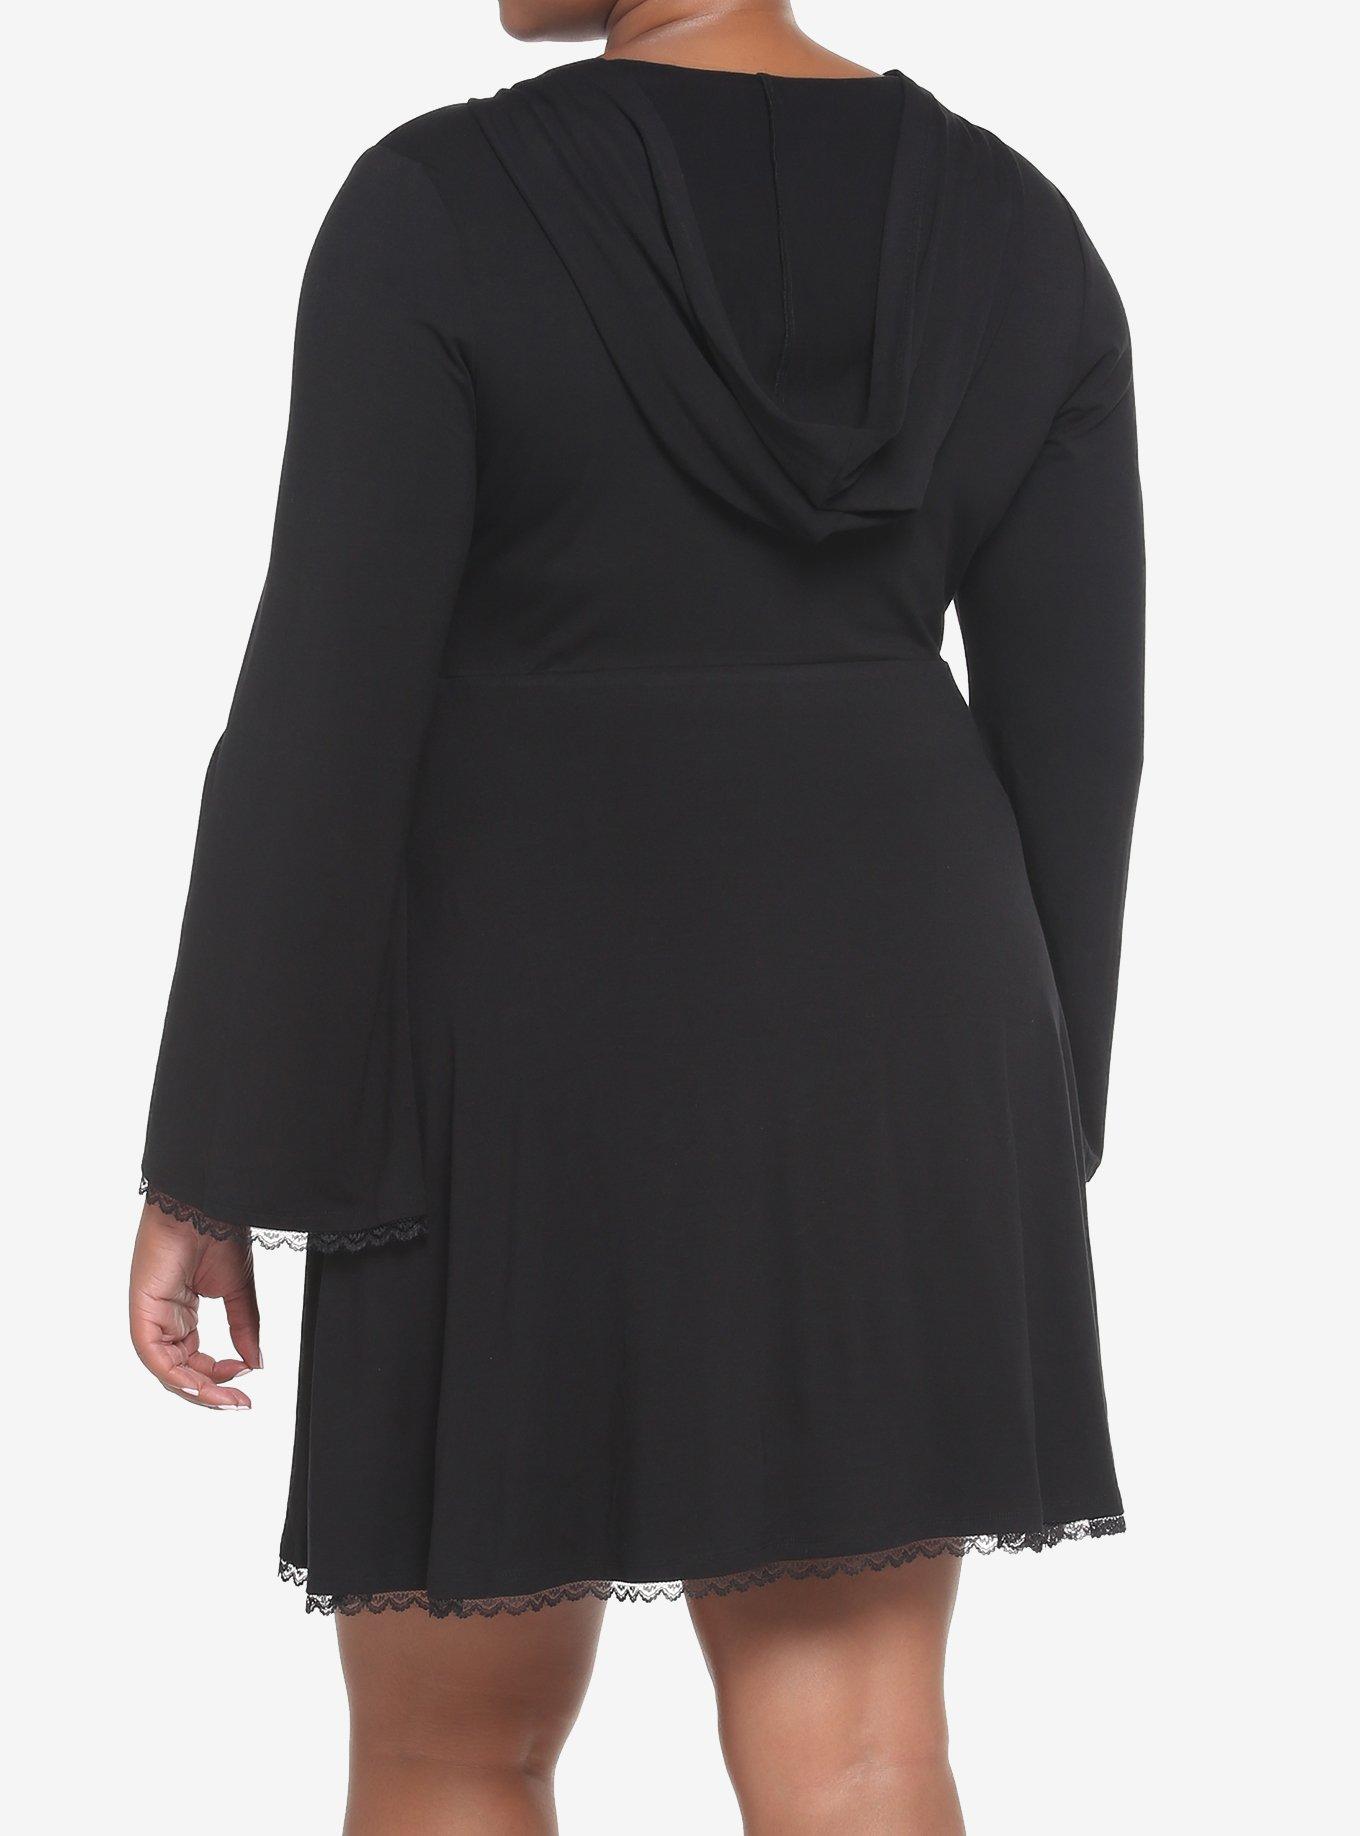 Black Lace-Up Front Hooded Dress Plus Size, BLACK, alternate